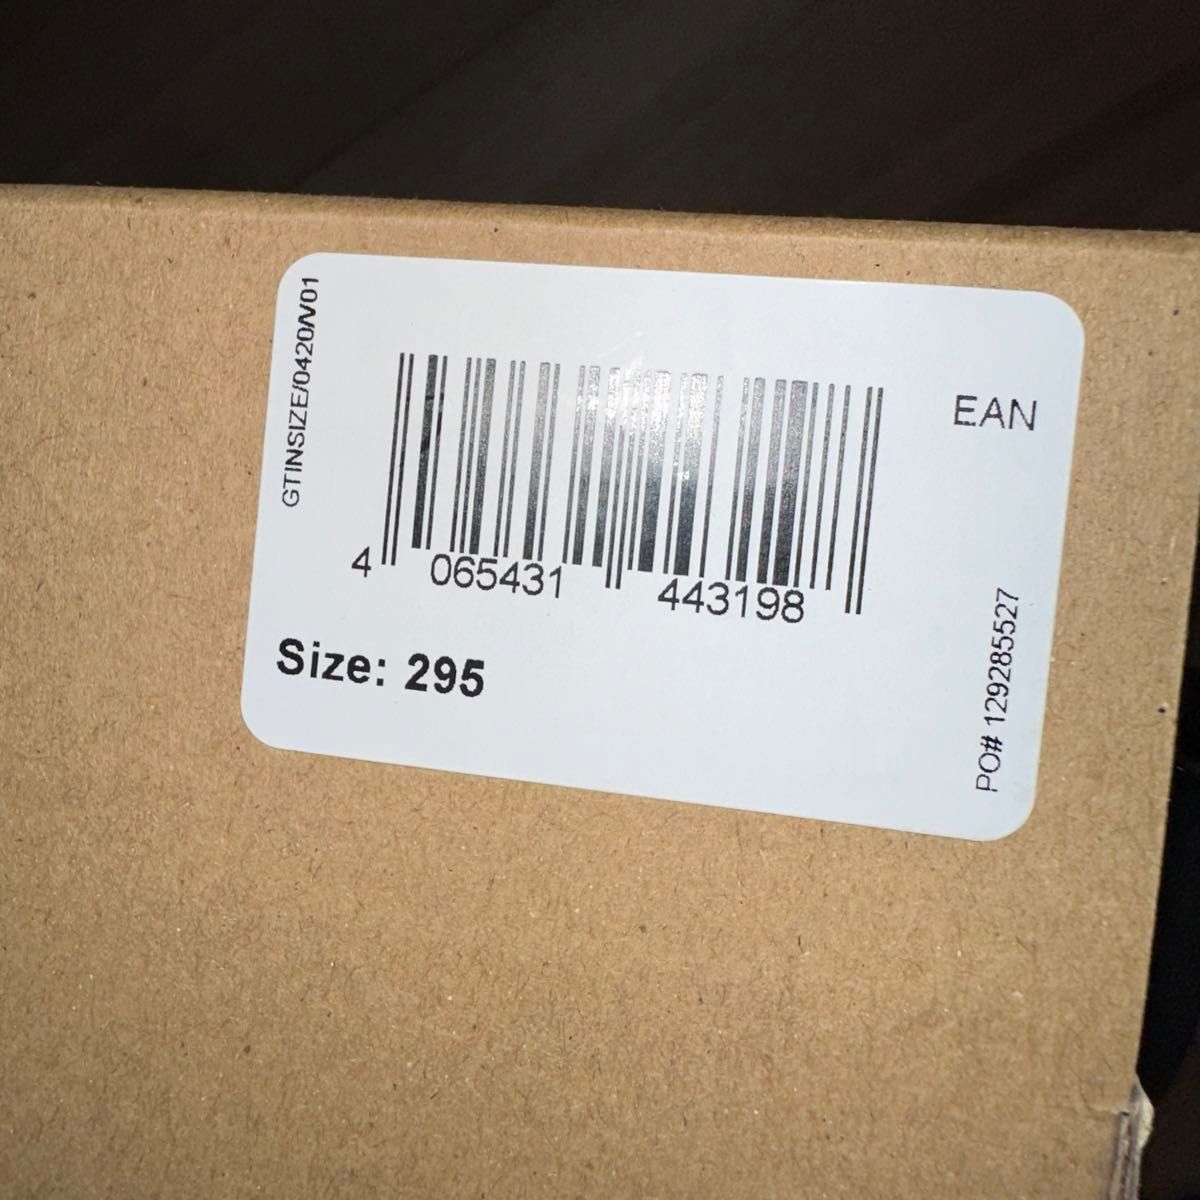 29.5cm adidas YEEZY Foam Runner Onyx フォームランナー イージー サンダル